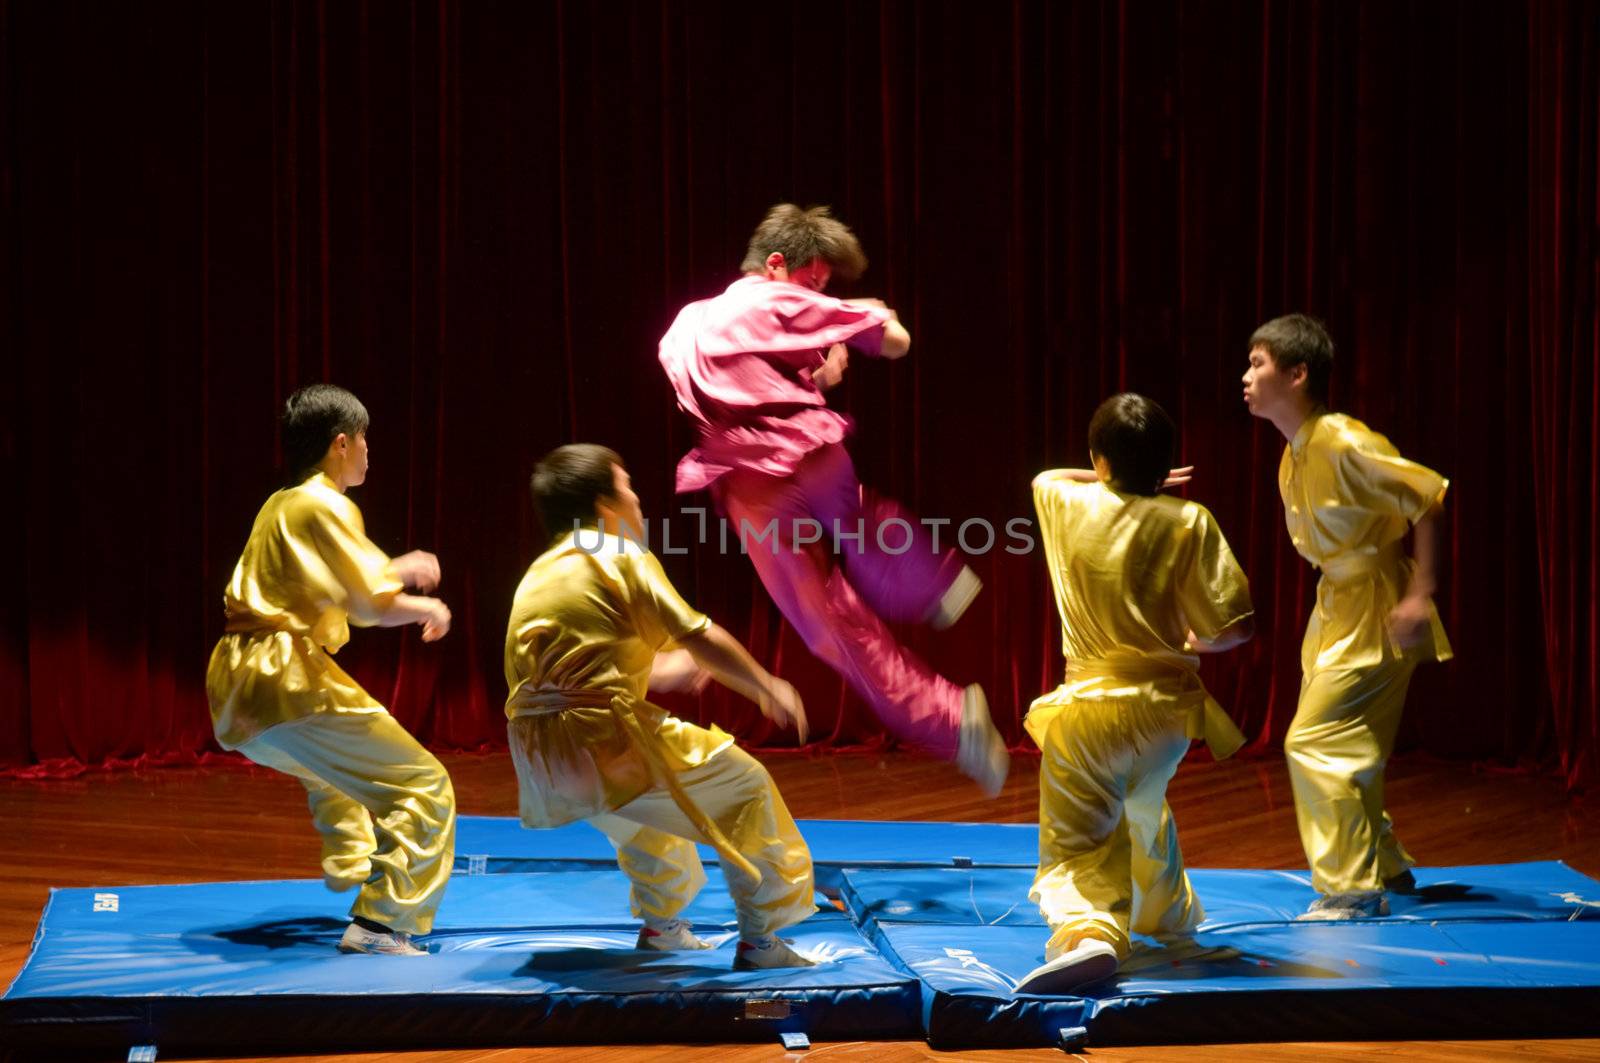 MACAU - APRIL 25: Performing Chinese kung fu (wu shu) with pose of kicking enemies, April 25, 2009, Macau, China